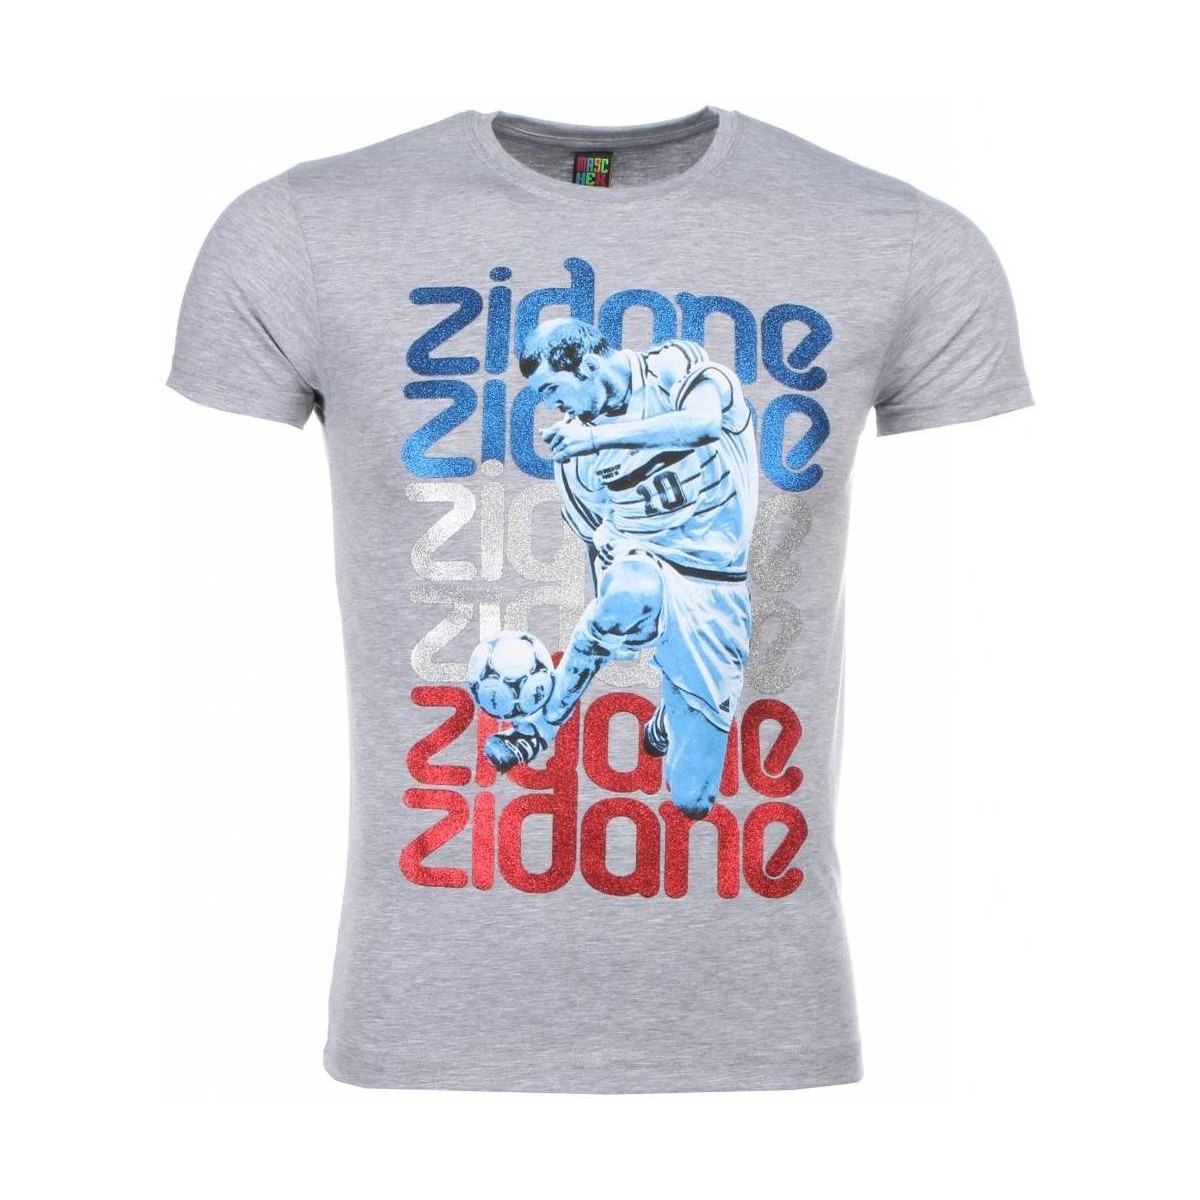 textil Hombre Camisetas manga corta Local Fanatic Zidane Print Gris